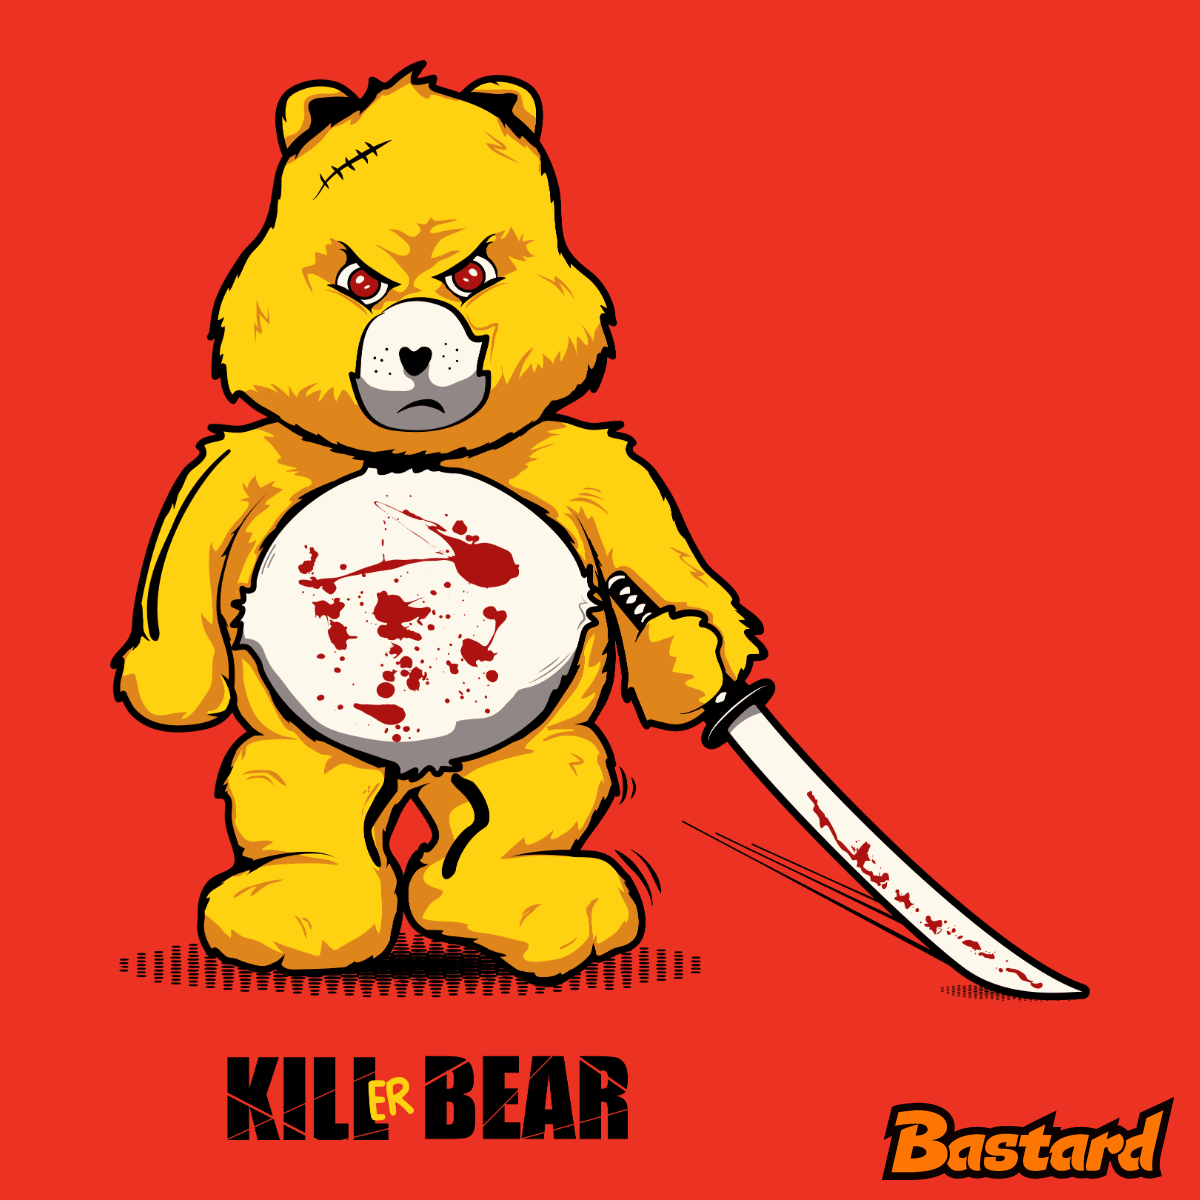 Killer bear